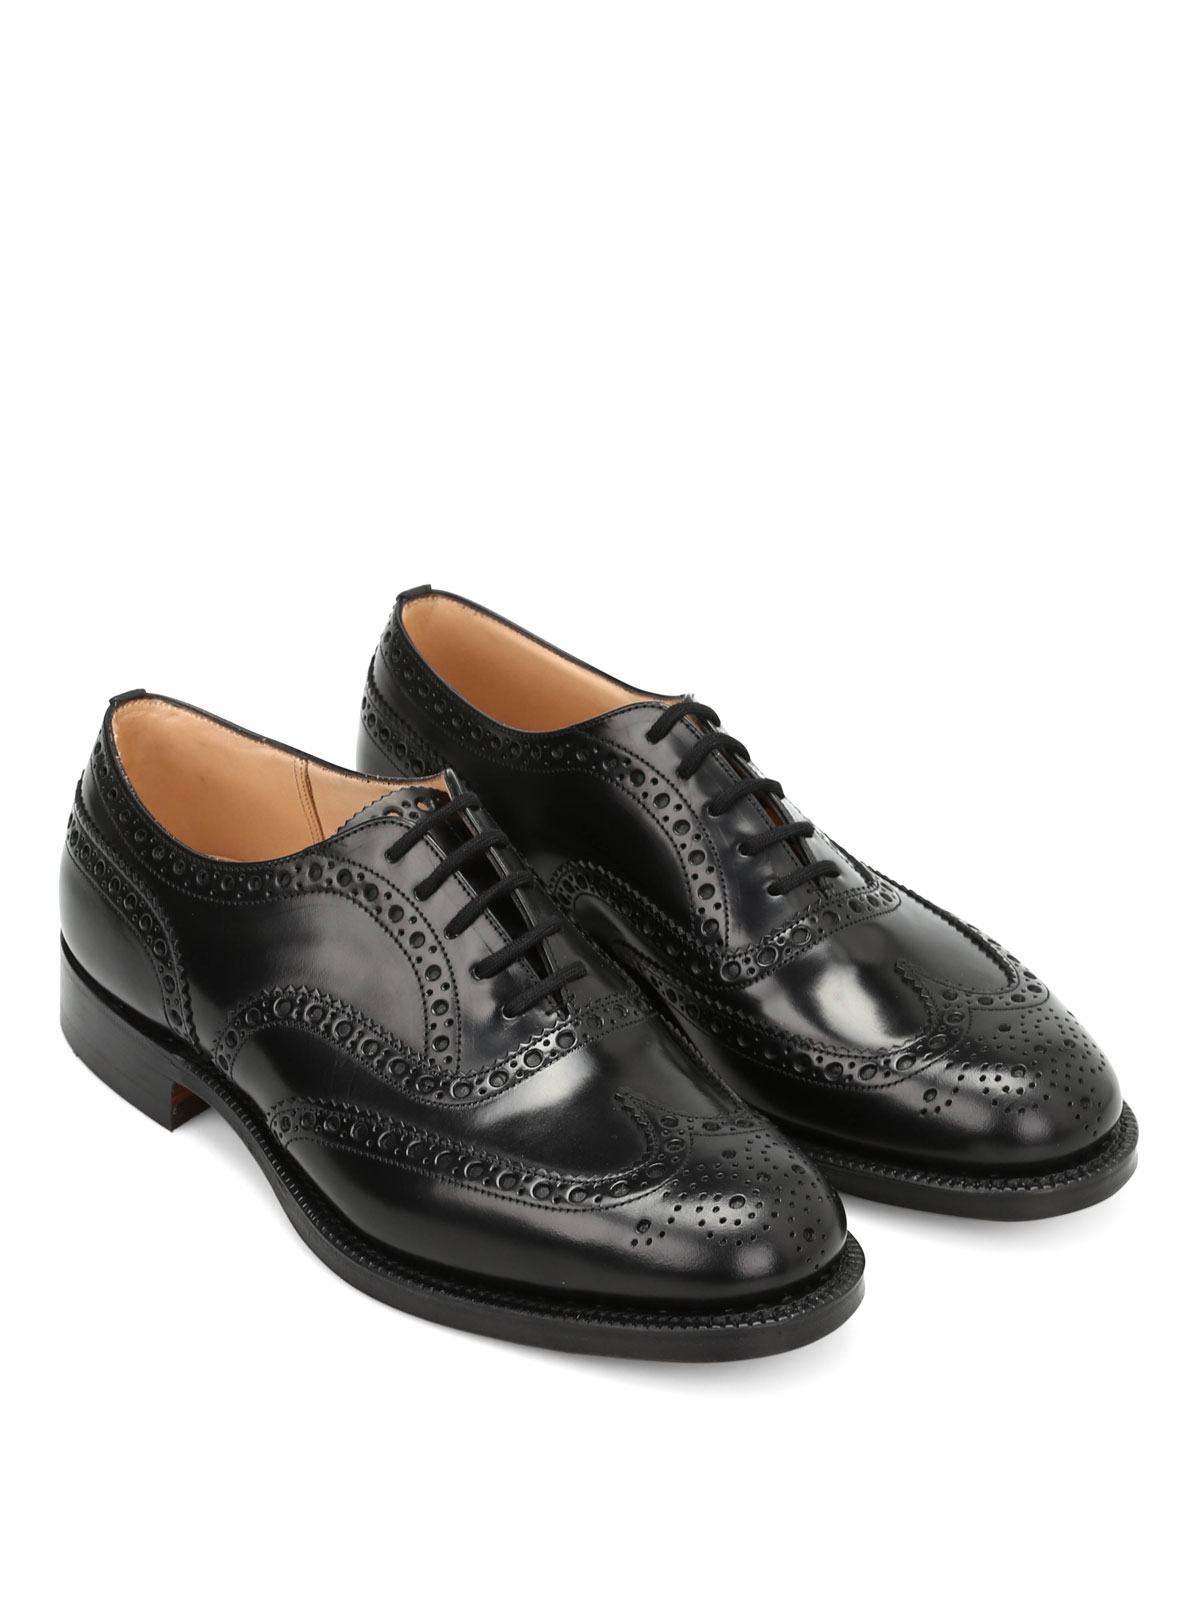 Burwood Men's BWD 243 L Formal Shoes (L TAN_8 UK_BW 434), L TAN, 8 UK : Buy  Online at Best Price in KSA - Souq is now Amazon.sa: Fashion